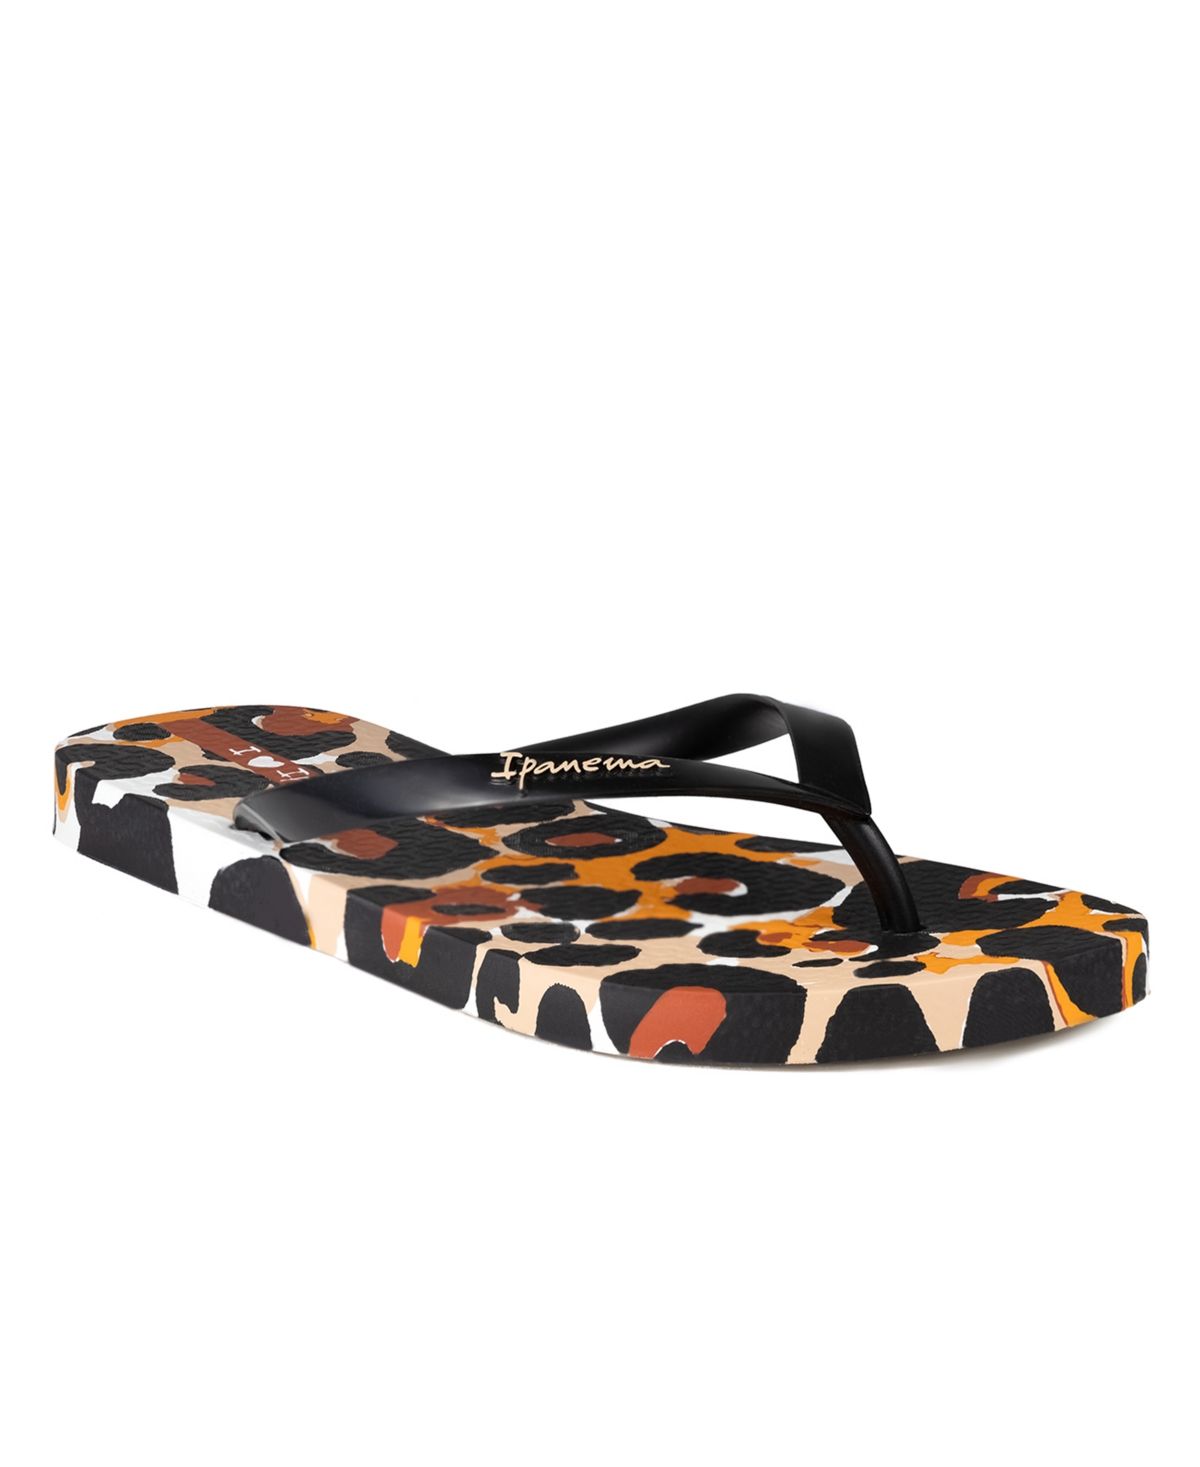 Ipanema Women's Animale Print Ii Flip-flop Sandals Women's Shoes In White/black/orange